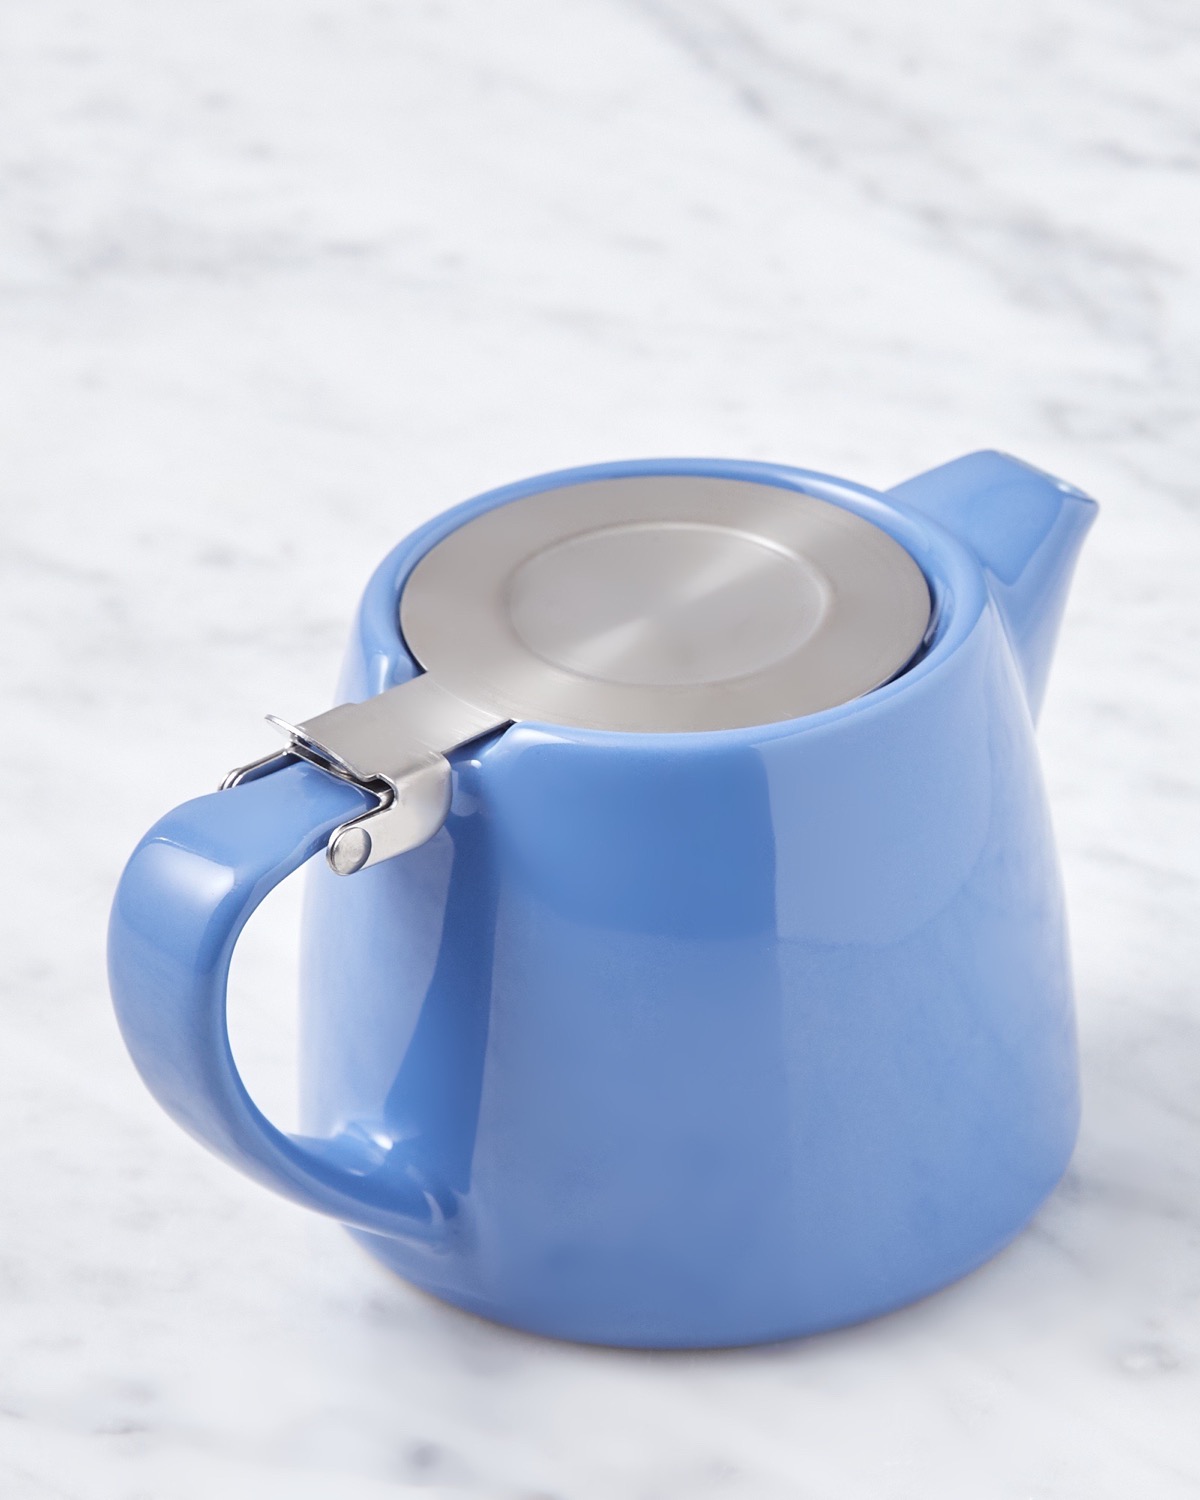 Infuser Teapot: Henley Teapot - 1350ml/47 fl. oz